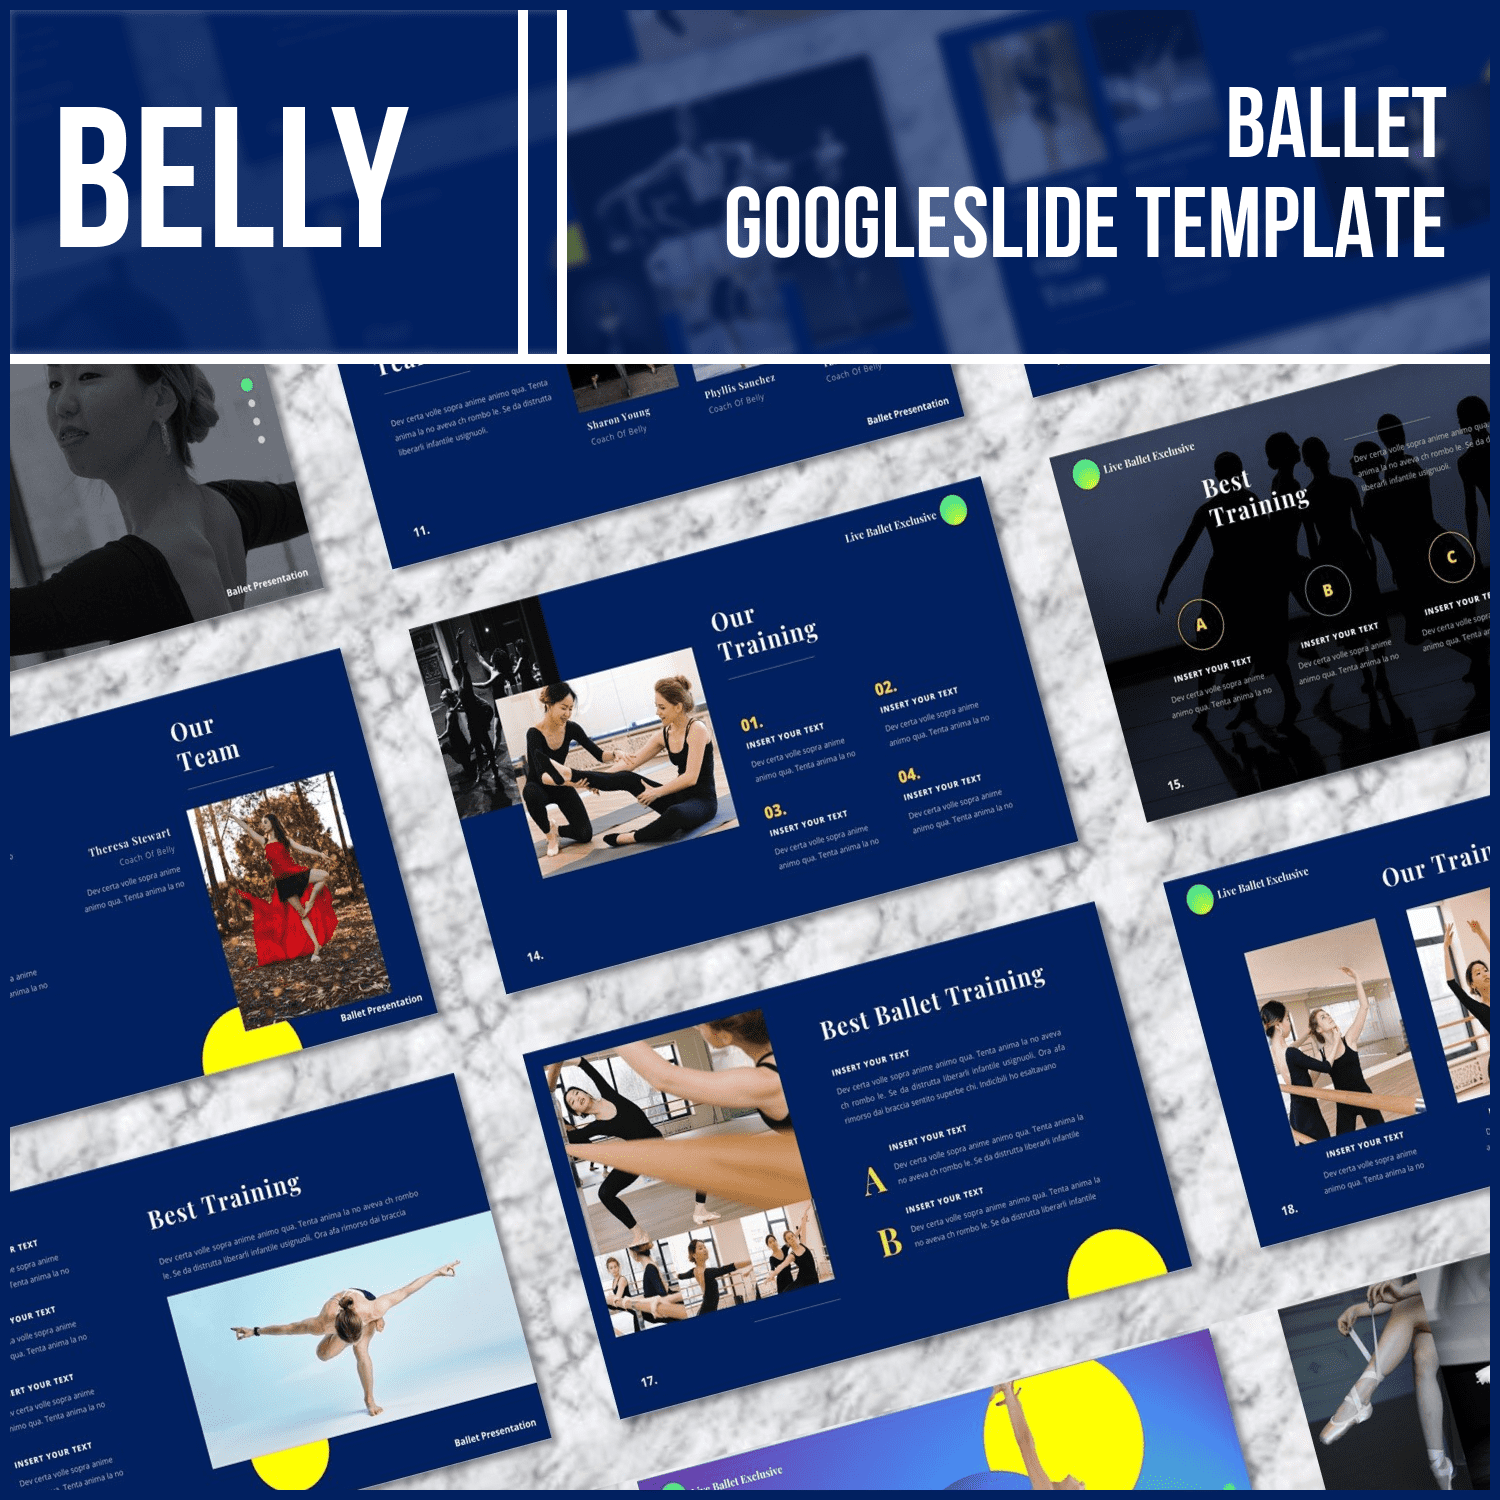 Belly - Ballet Googleslide Template.